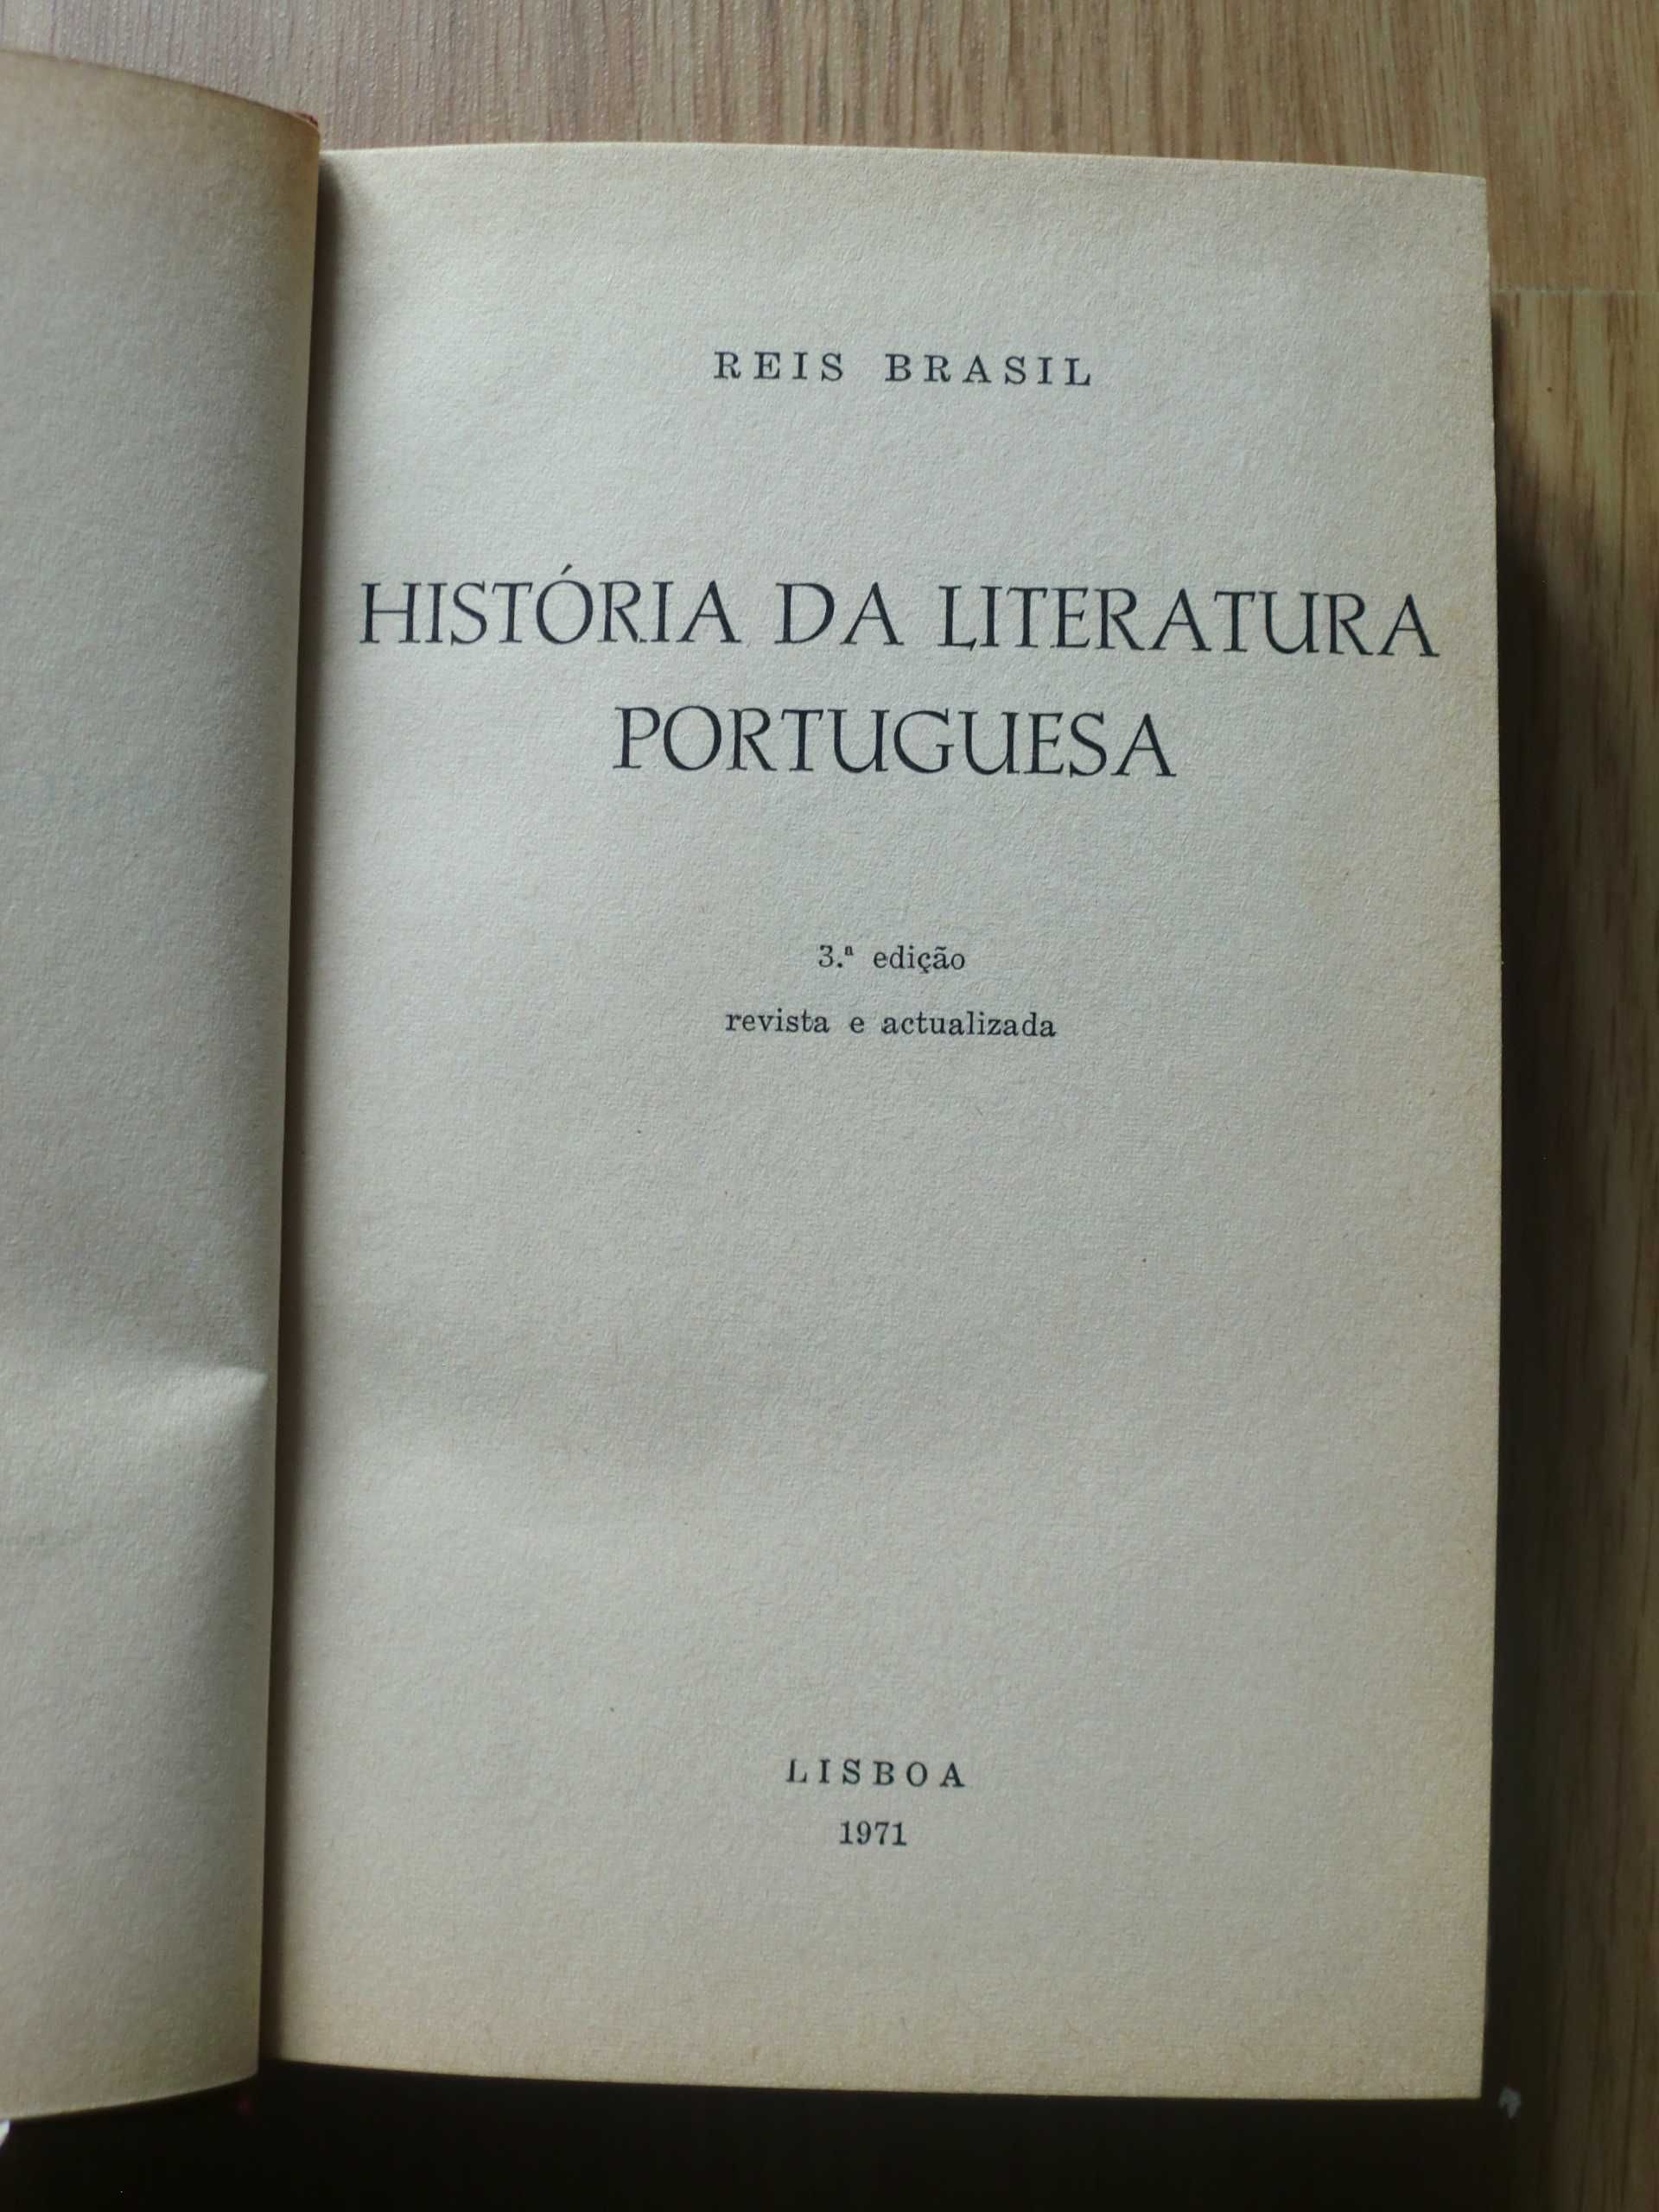 História da Literatura Portuguesa
de Reis Brasil